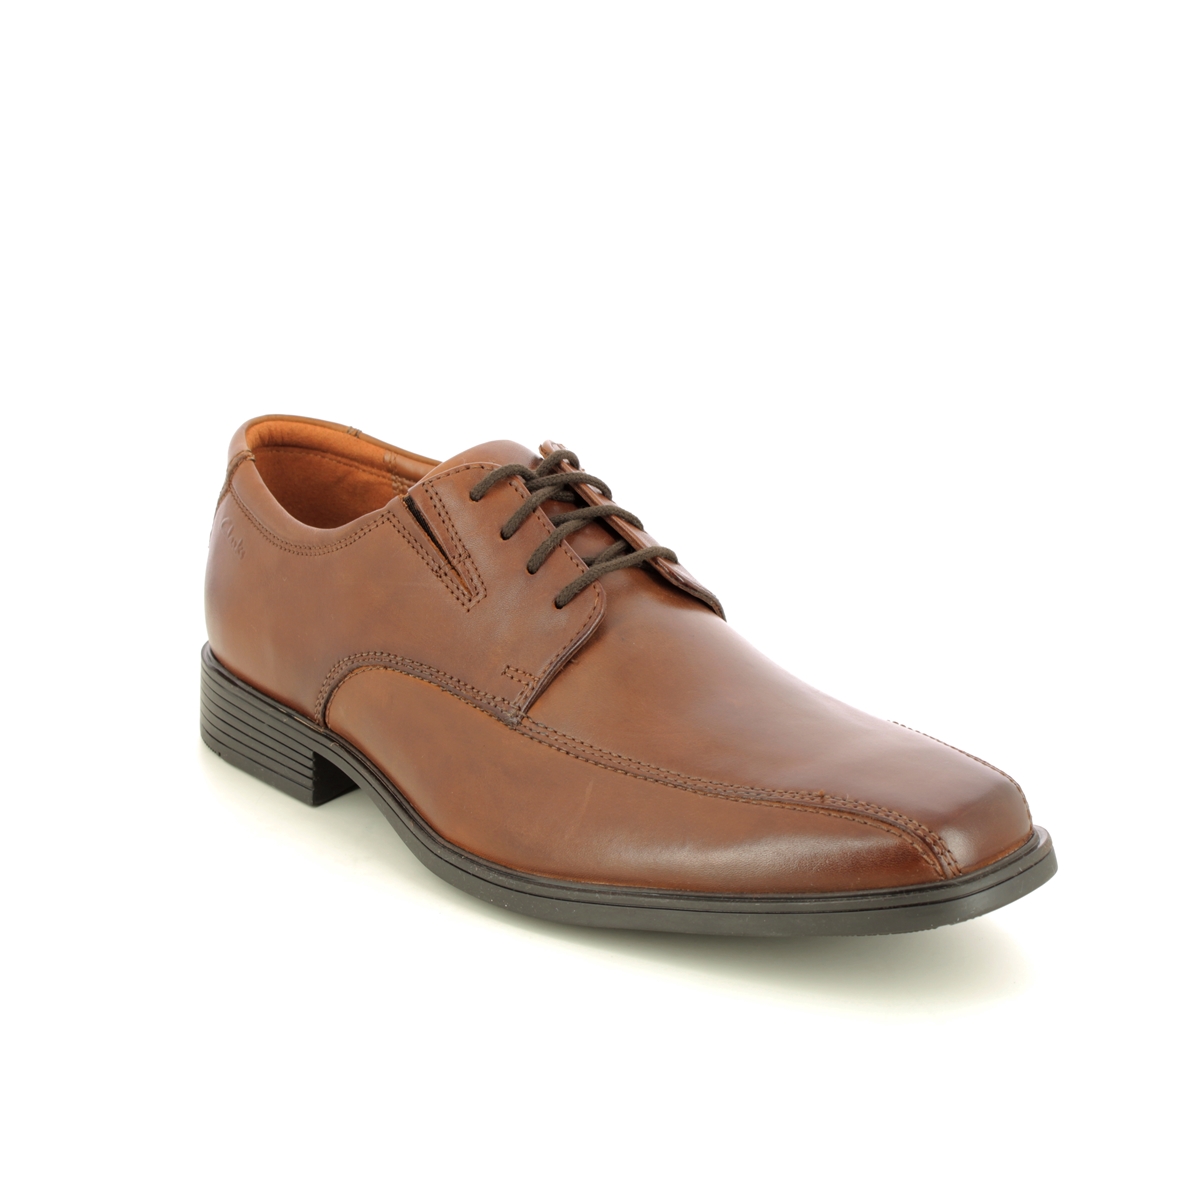 Clarks Tilden Walk Dark Tan Mens formal shoes 3009-57G in a Plain Leather in Size 9